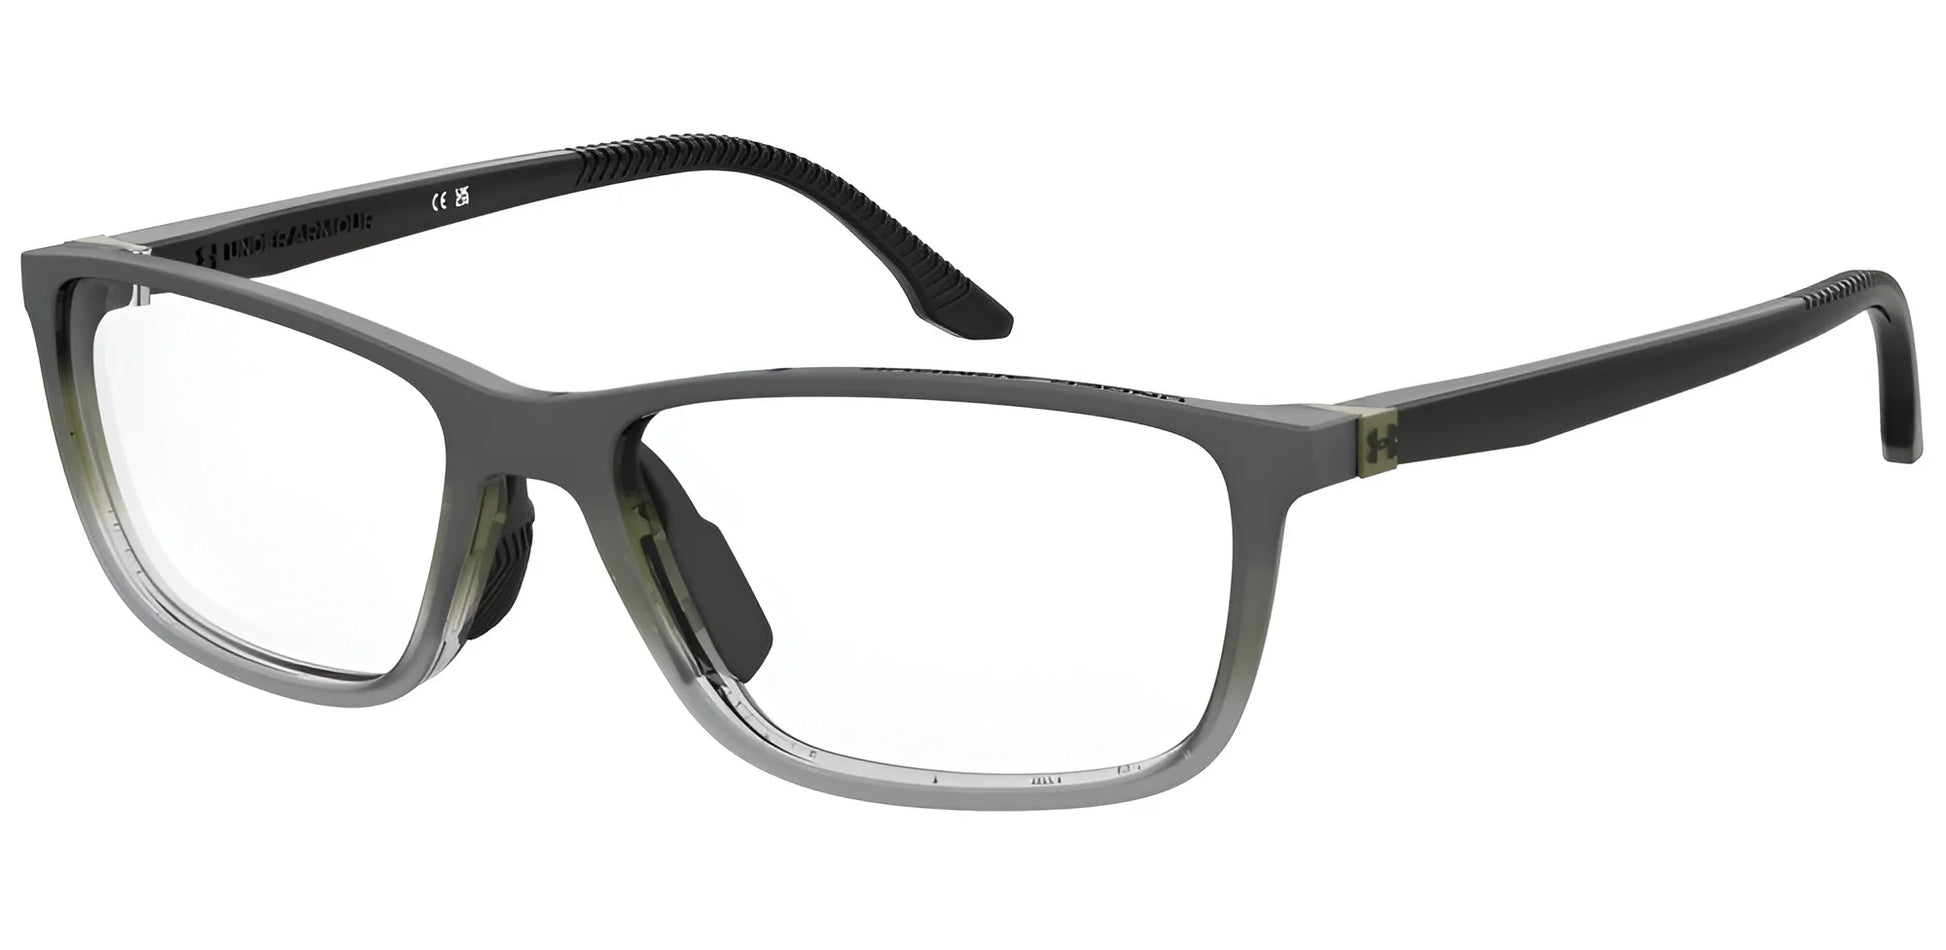 Under Armour 5070 Eyeglasses Blackgreen